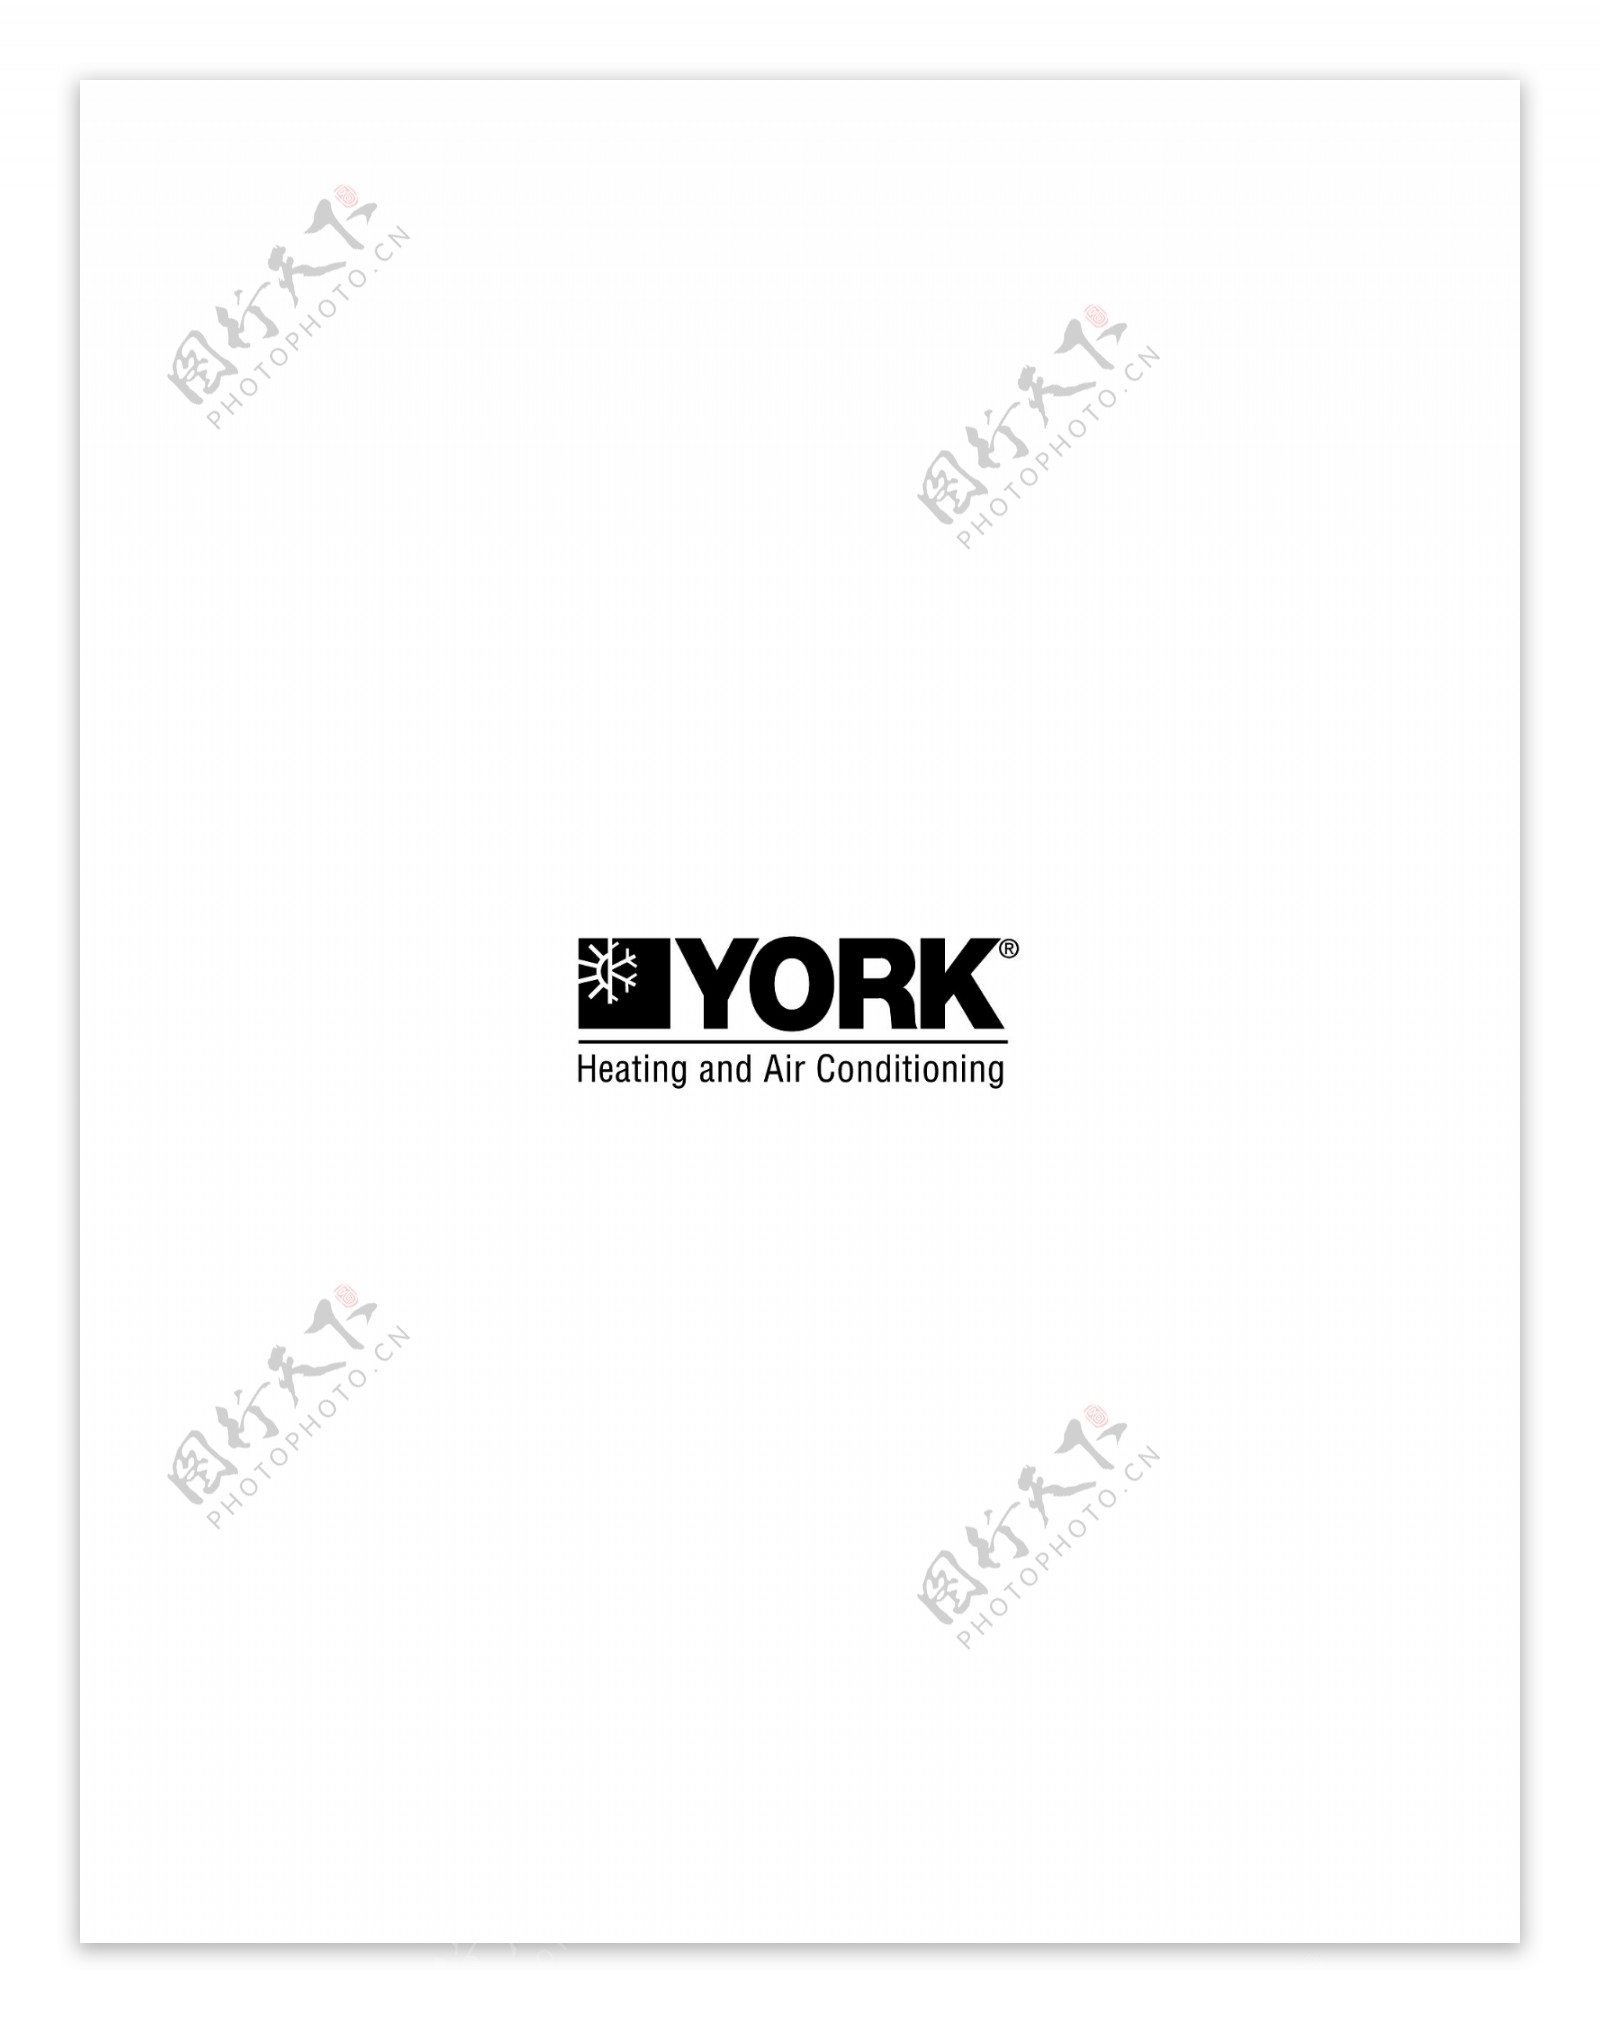 York1logo设计欣赏York1民航标志下载标志设计欣赏